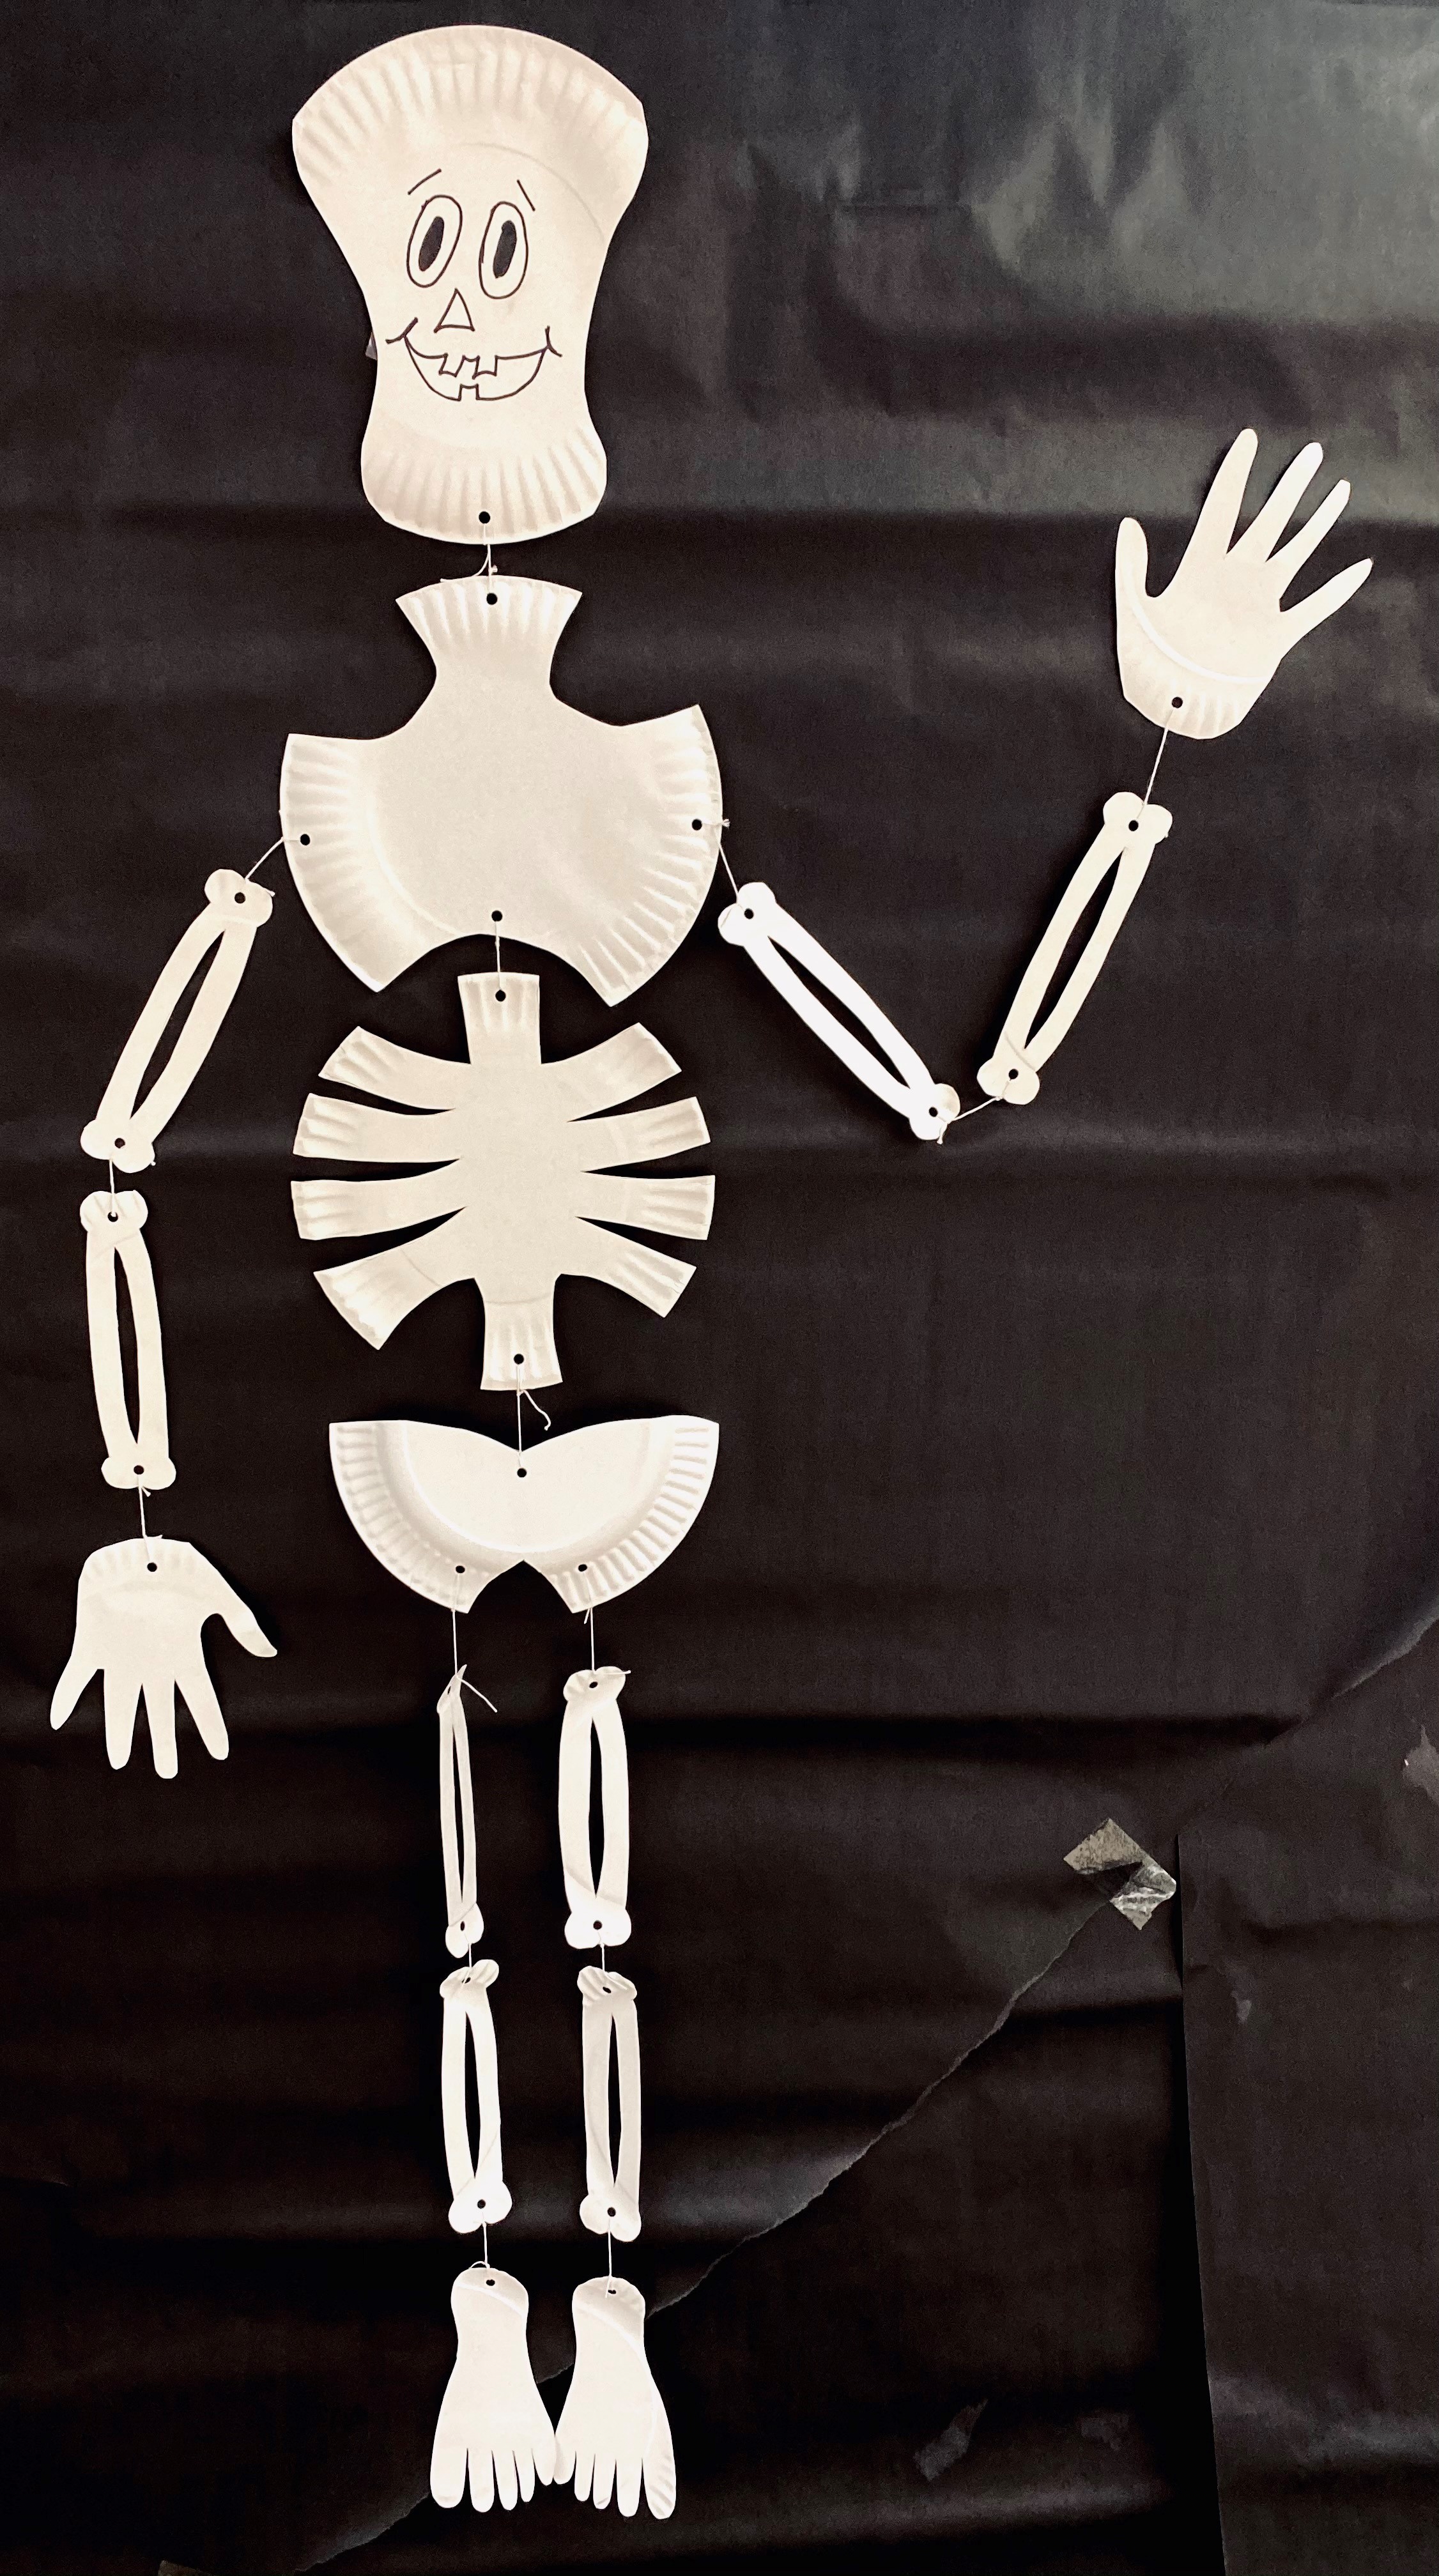 Paper Plate Skeleton